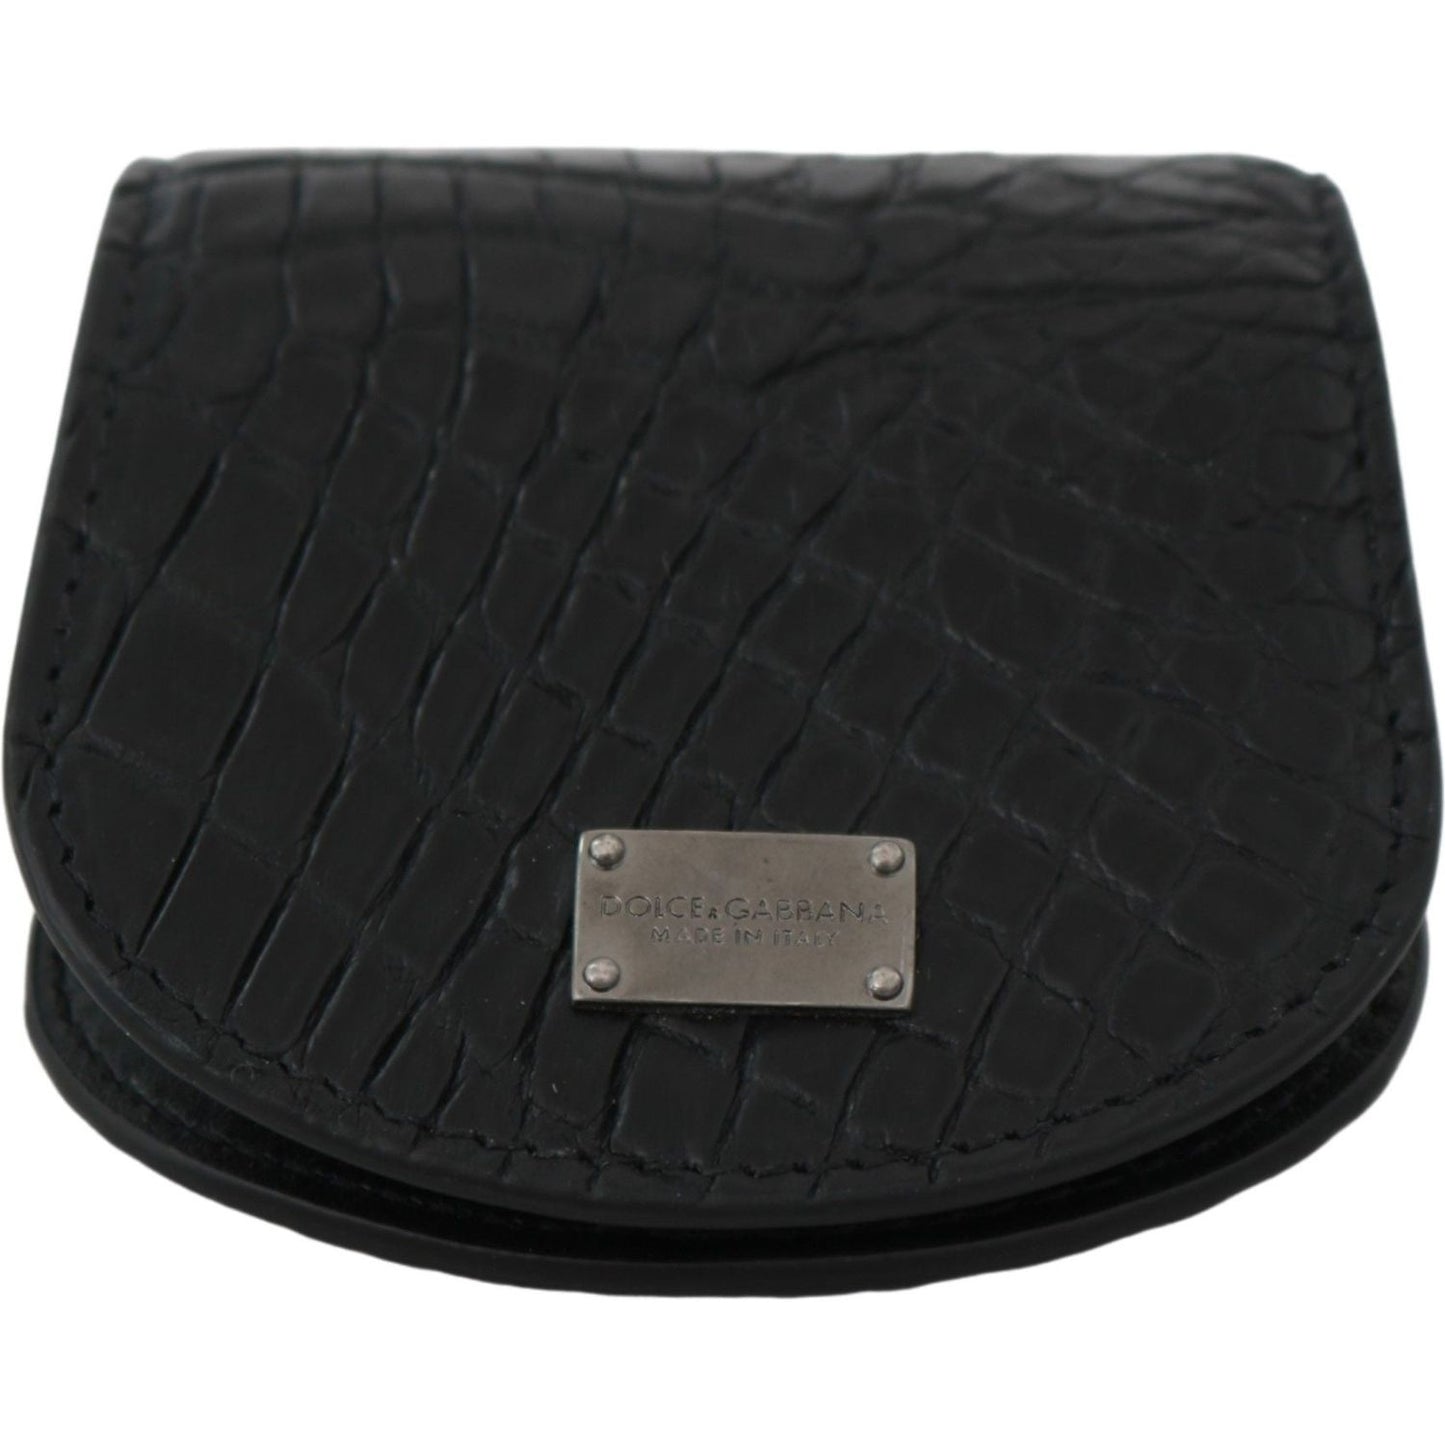 Dolce & Gabbana Sleek Black Leather Coin Case Wallet black-exotic-skin-pocket-condom-case-holder Condom Case IMG_0232-74824250-89a.jpg